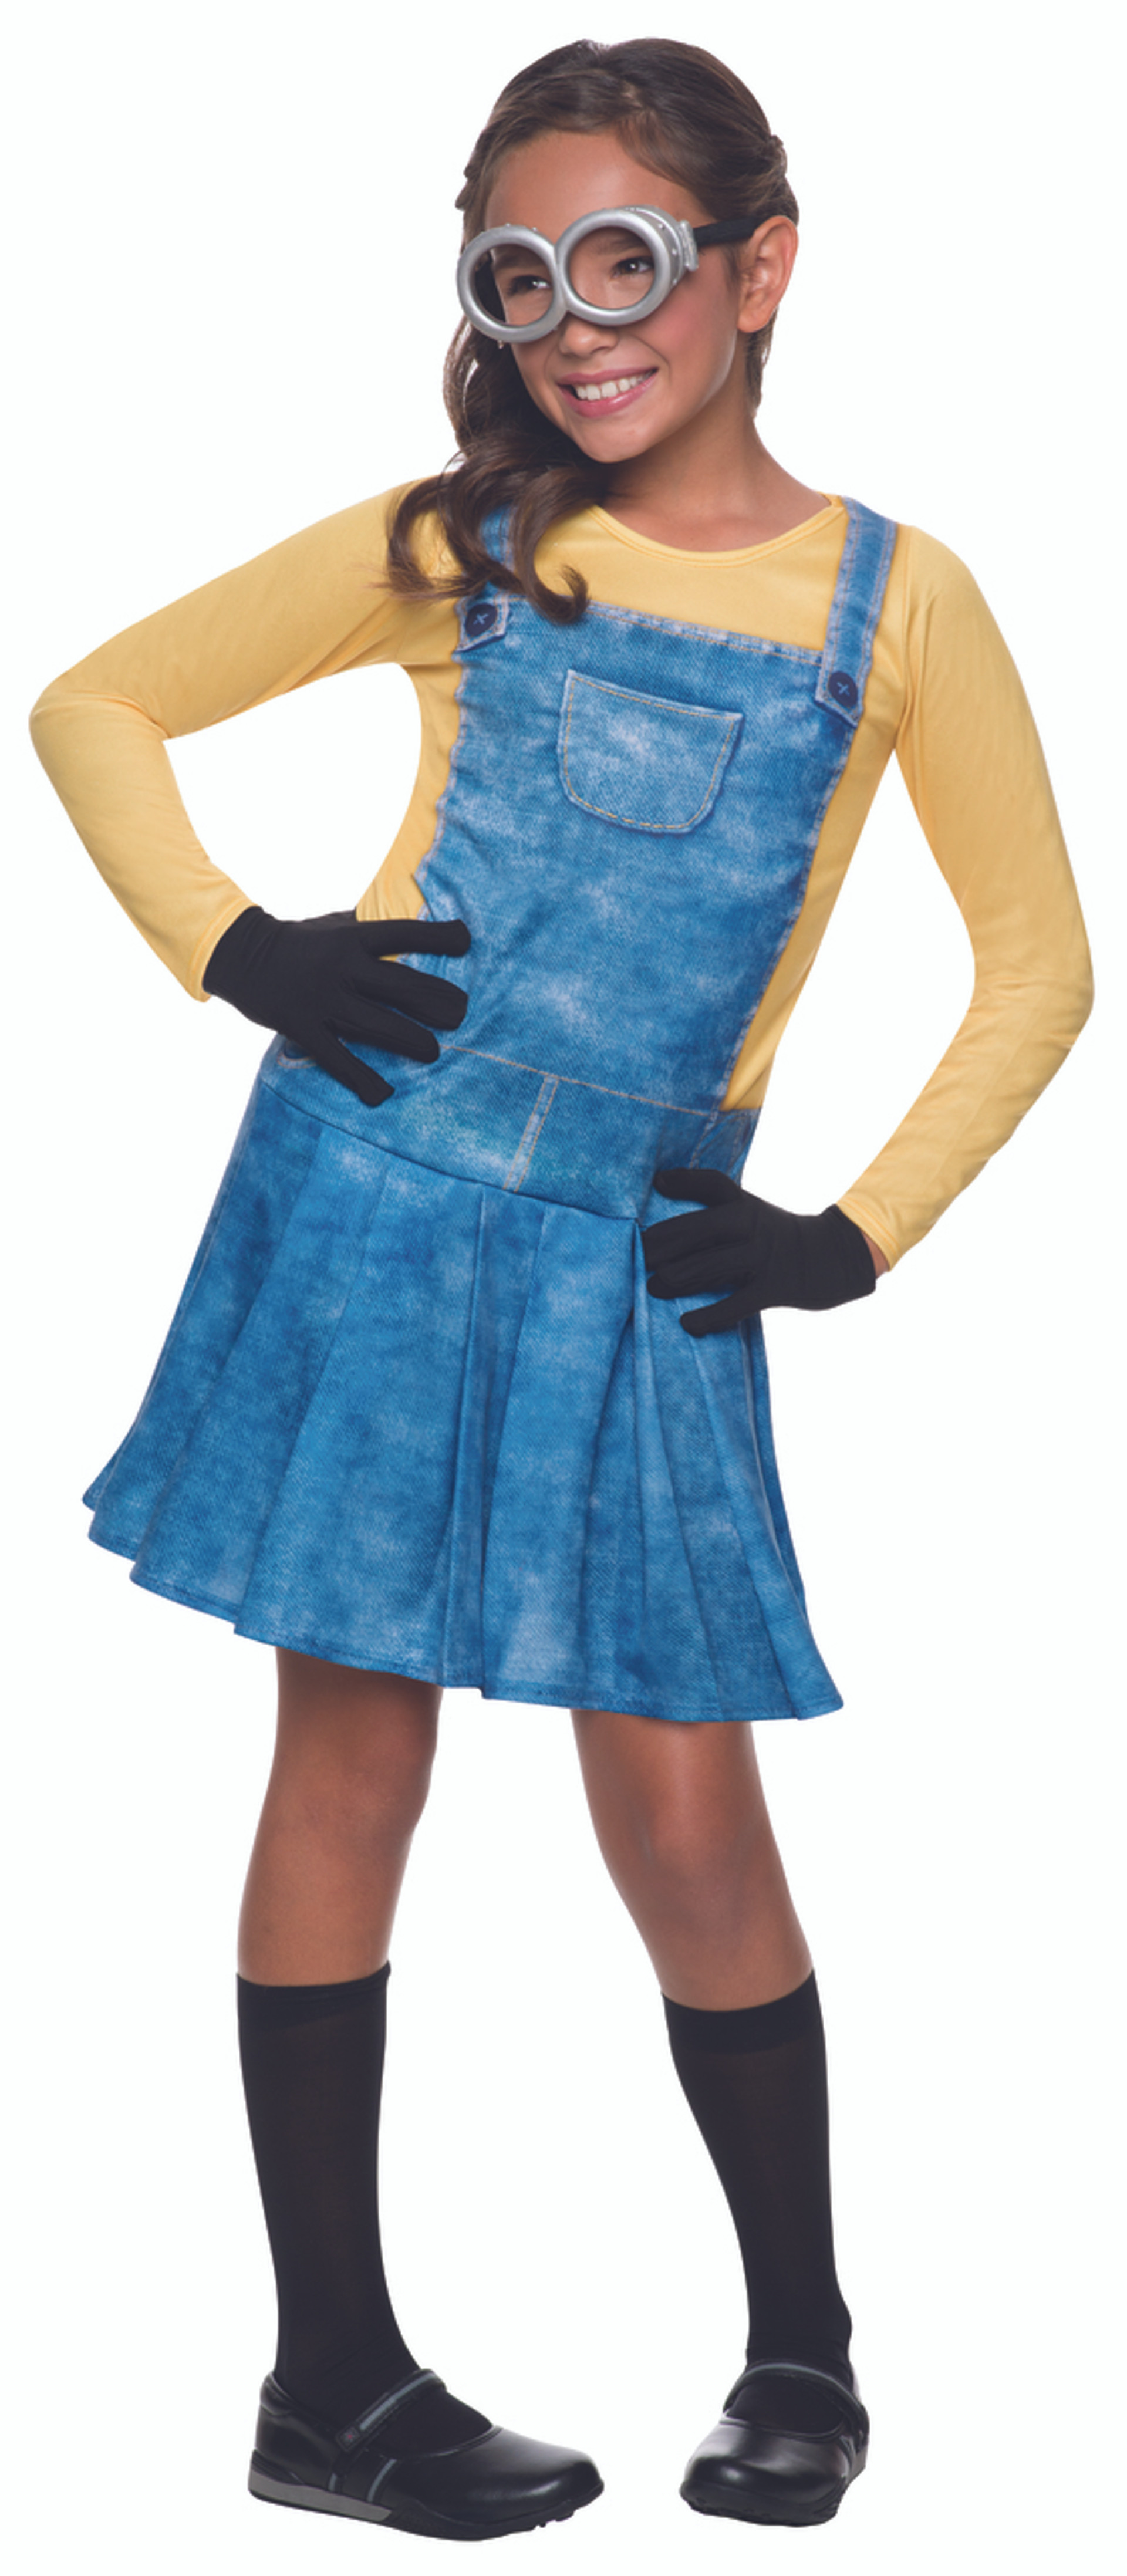 Toddler's Female Minion Costume - The Costume Shoppe